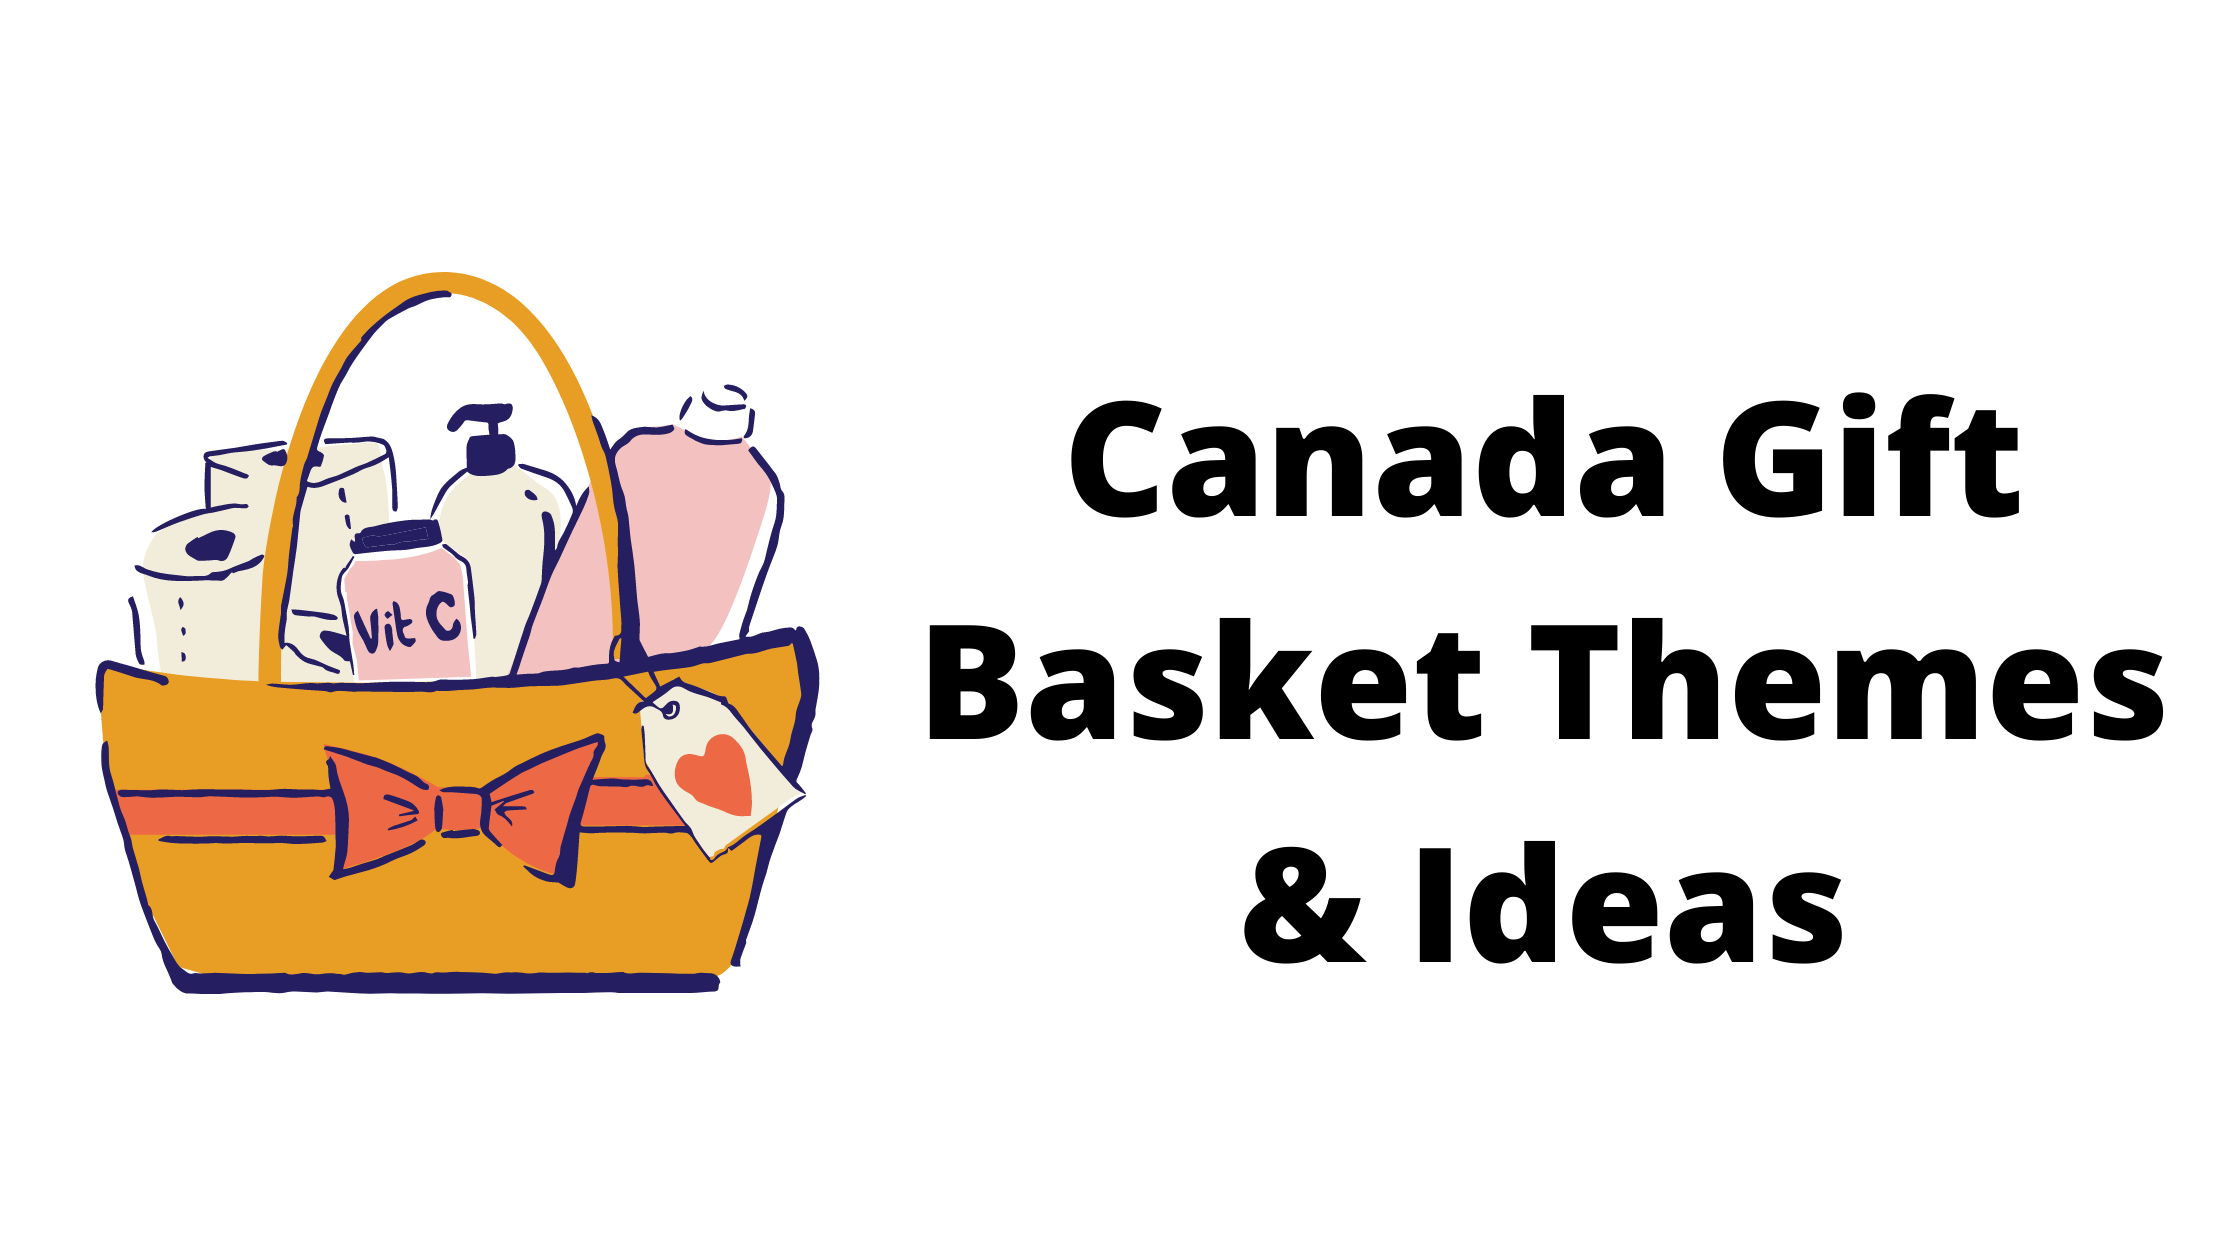 Canada Gift Basket Themes & Ideas